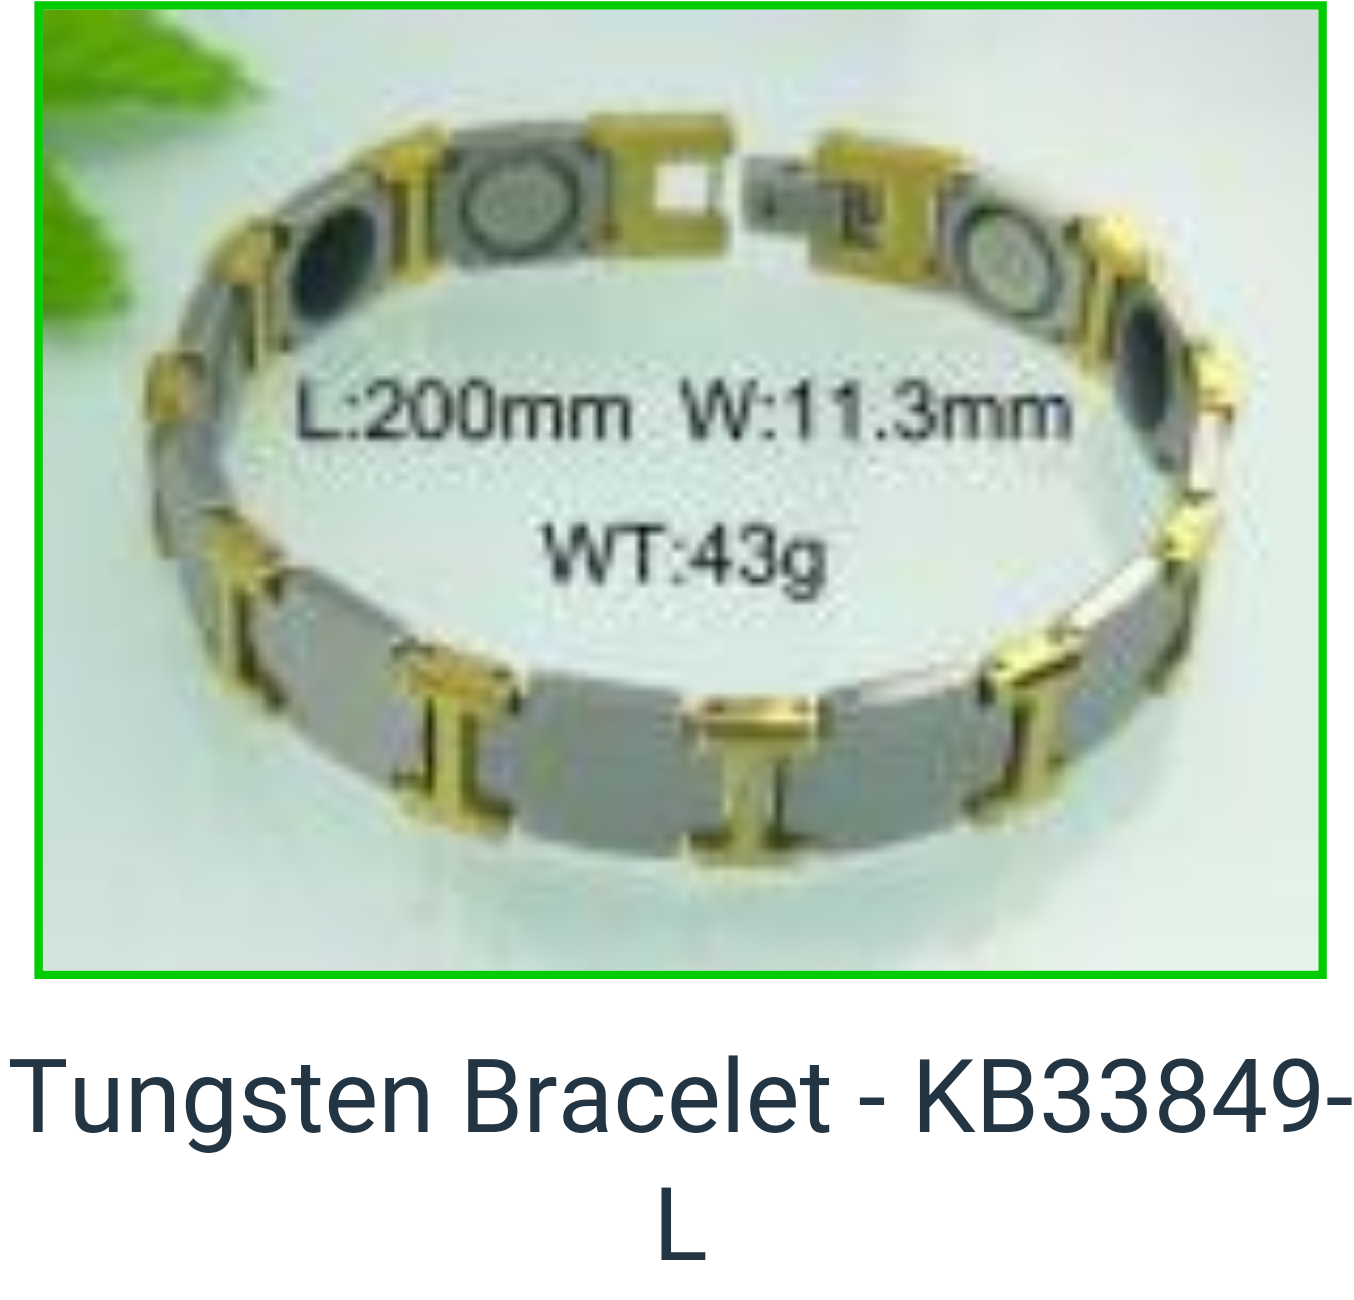 KB33849L - Tungsten Bracelet Two Tone